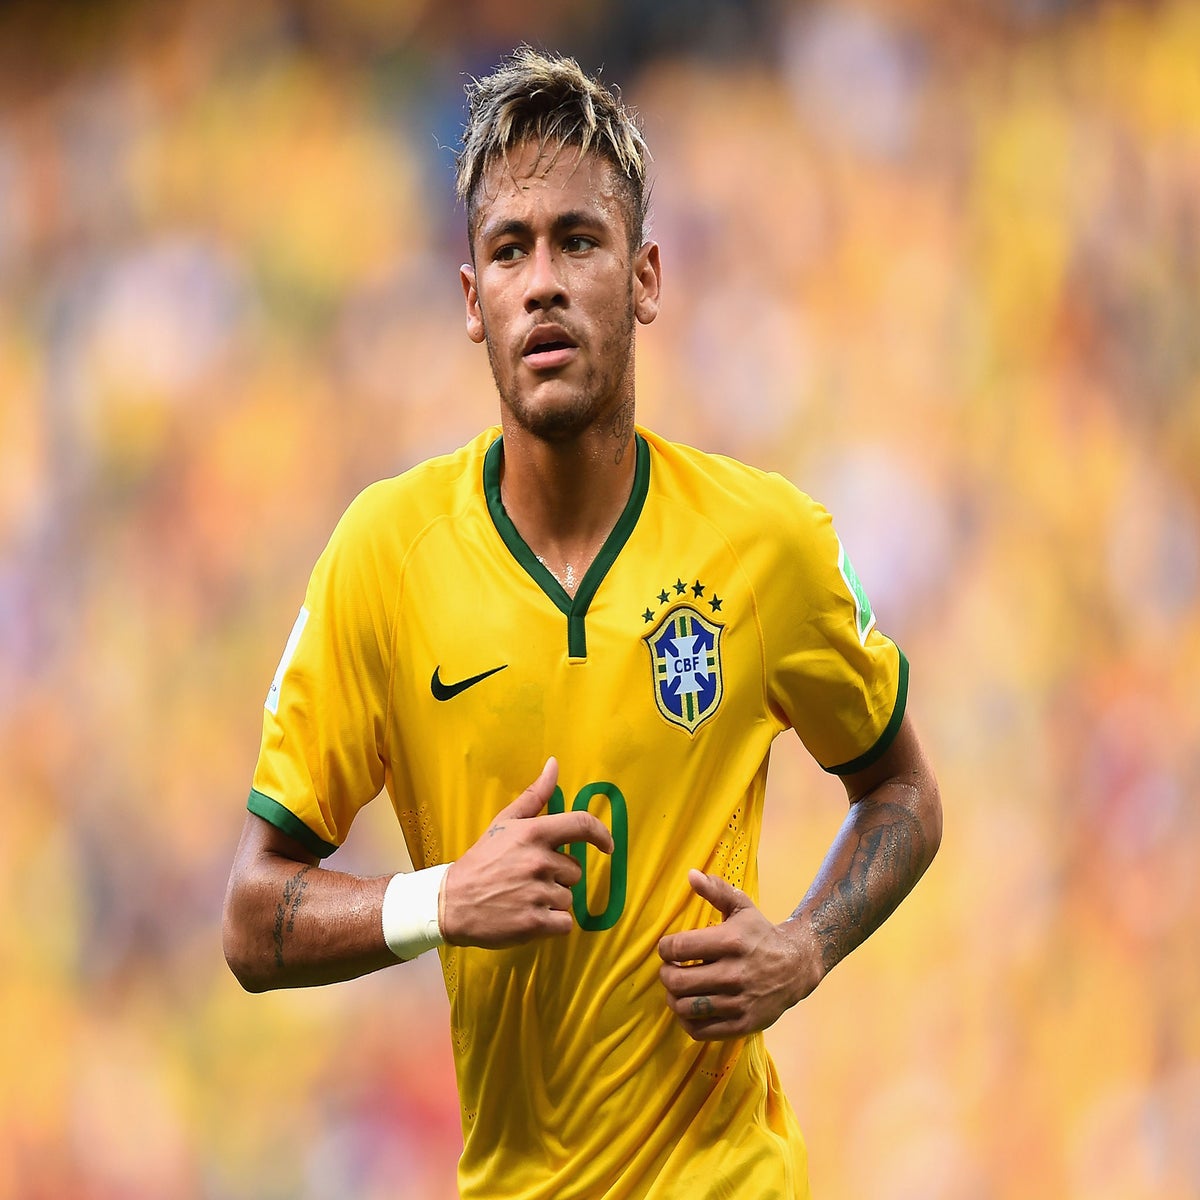 Brazilian football star Neymar, or Neymar Jr., poses as he arrives